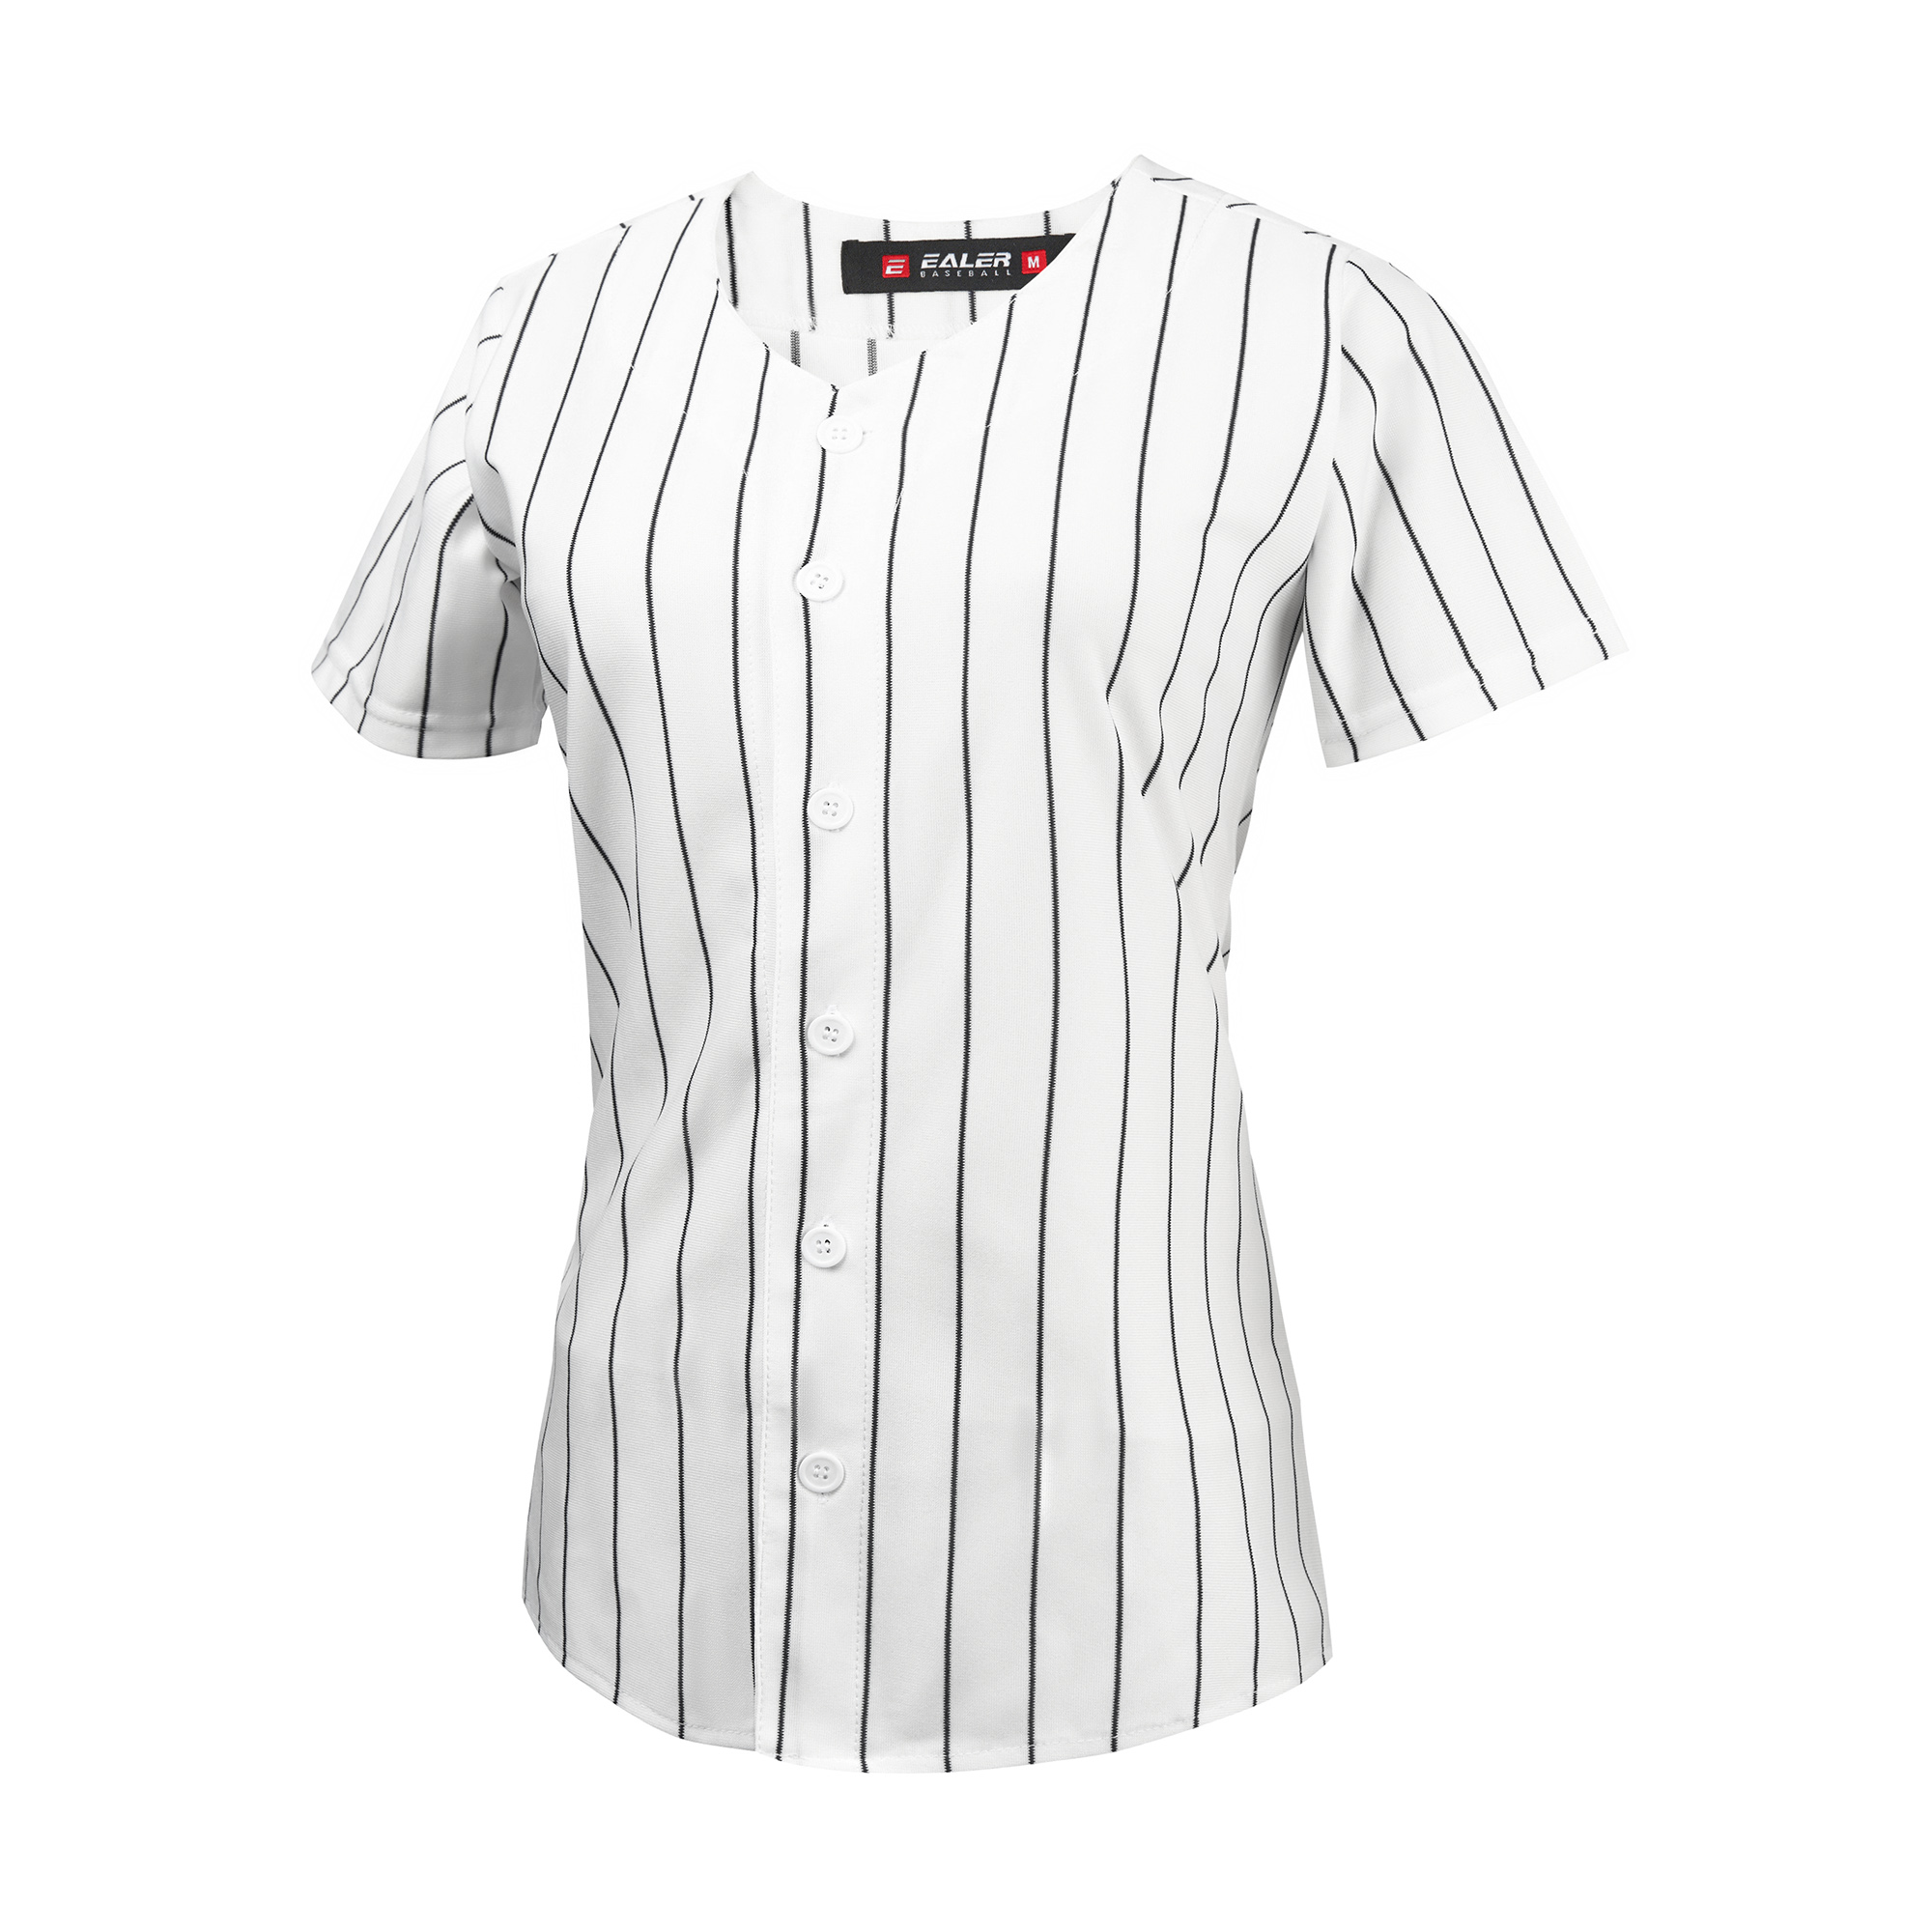  EALER BJW80 Womens Button Down Baseball Jersey, Blank Softball  Team Uniform, Hip Hop Hipster Plain Tshirts Short Sleeve Active Tee Shirts  Black : Sports & Outdoors